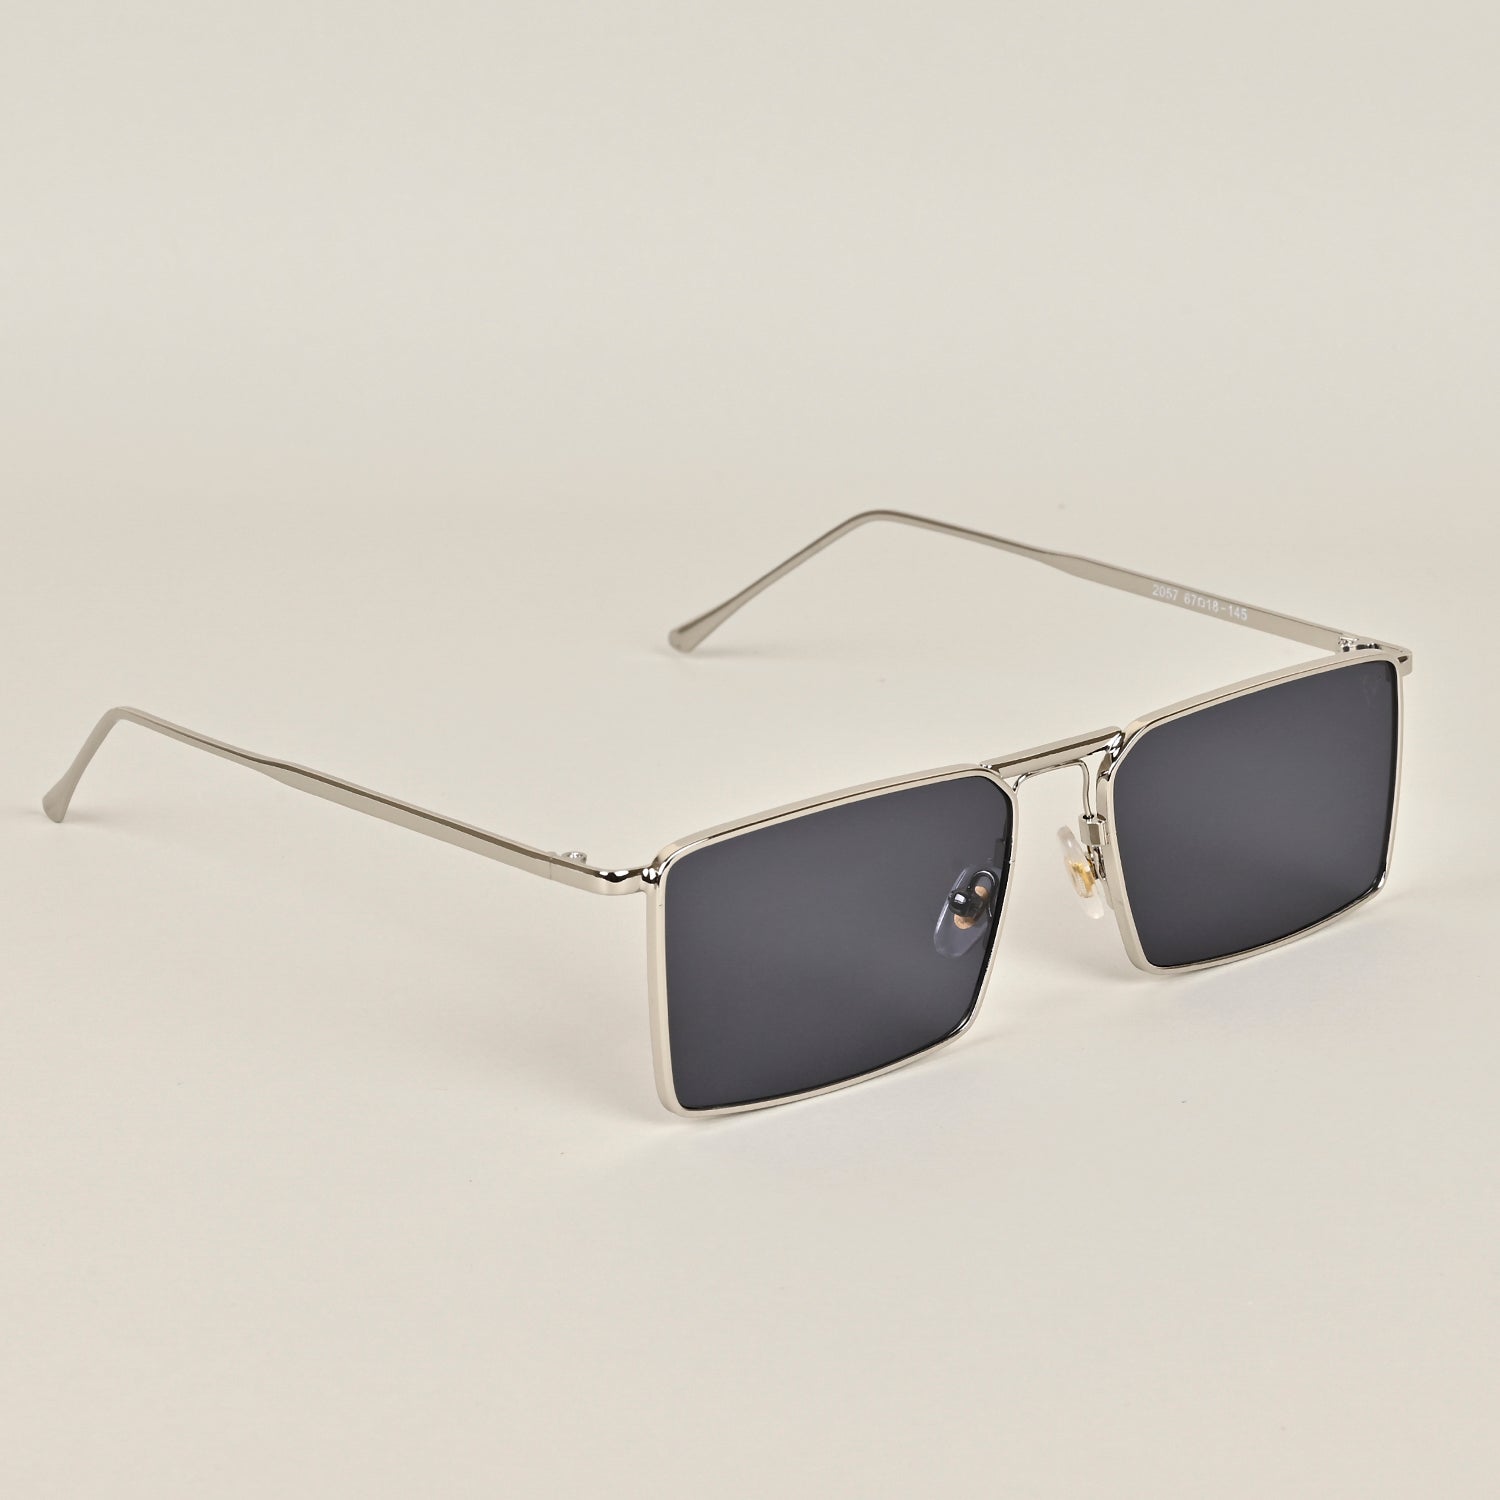 Voyage Black Silver Rectangular Sunglasses - MG3573